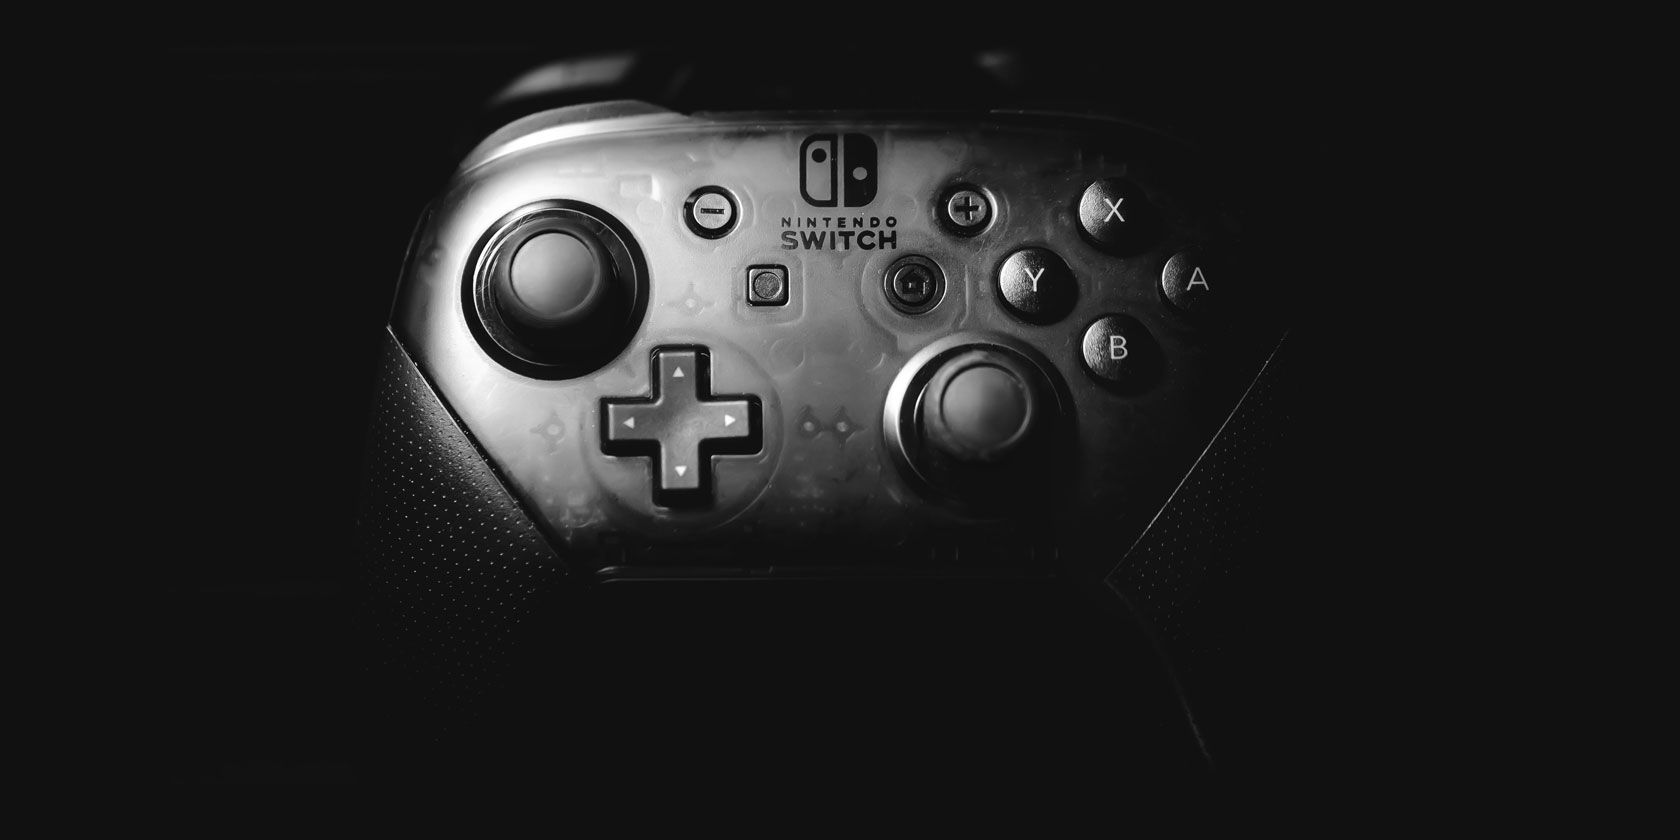 nintendo switch pro controller - DualShock 4 vs Switch Pro Controller: qual è il migliore per i giochi su PC?